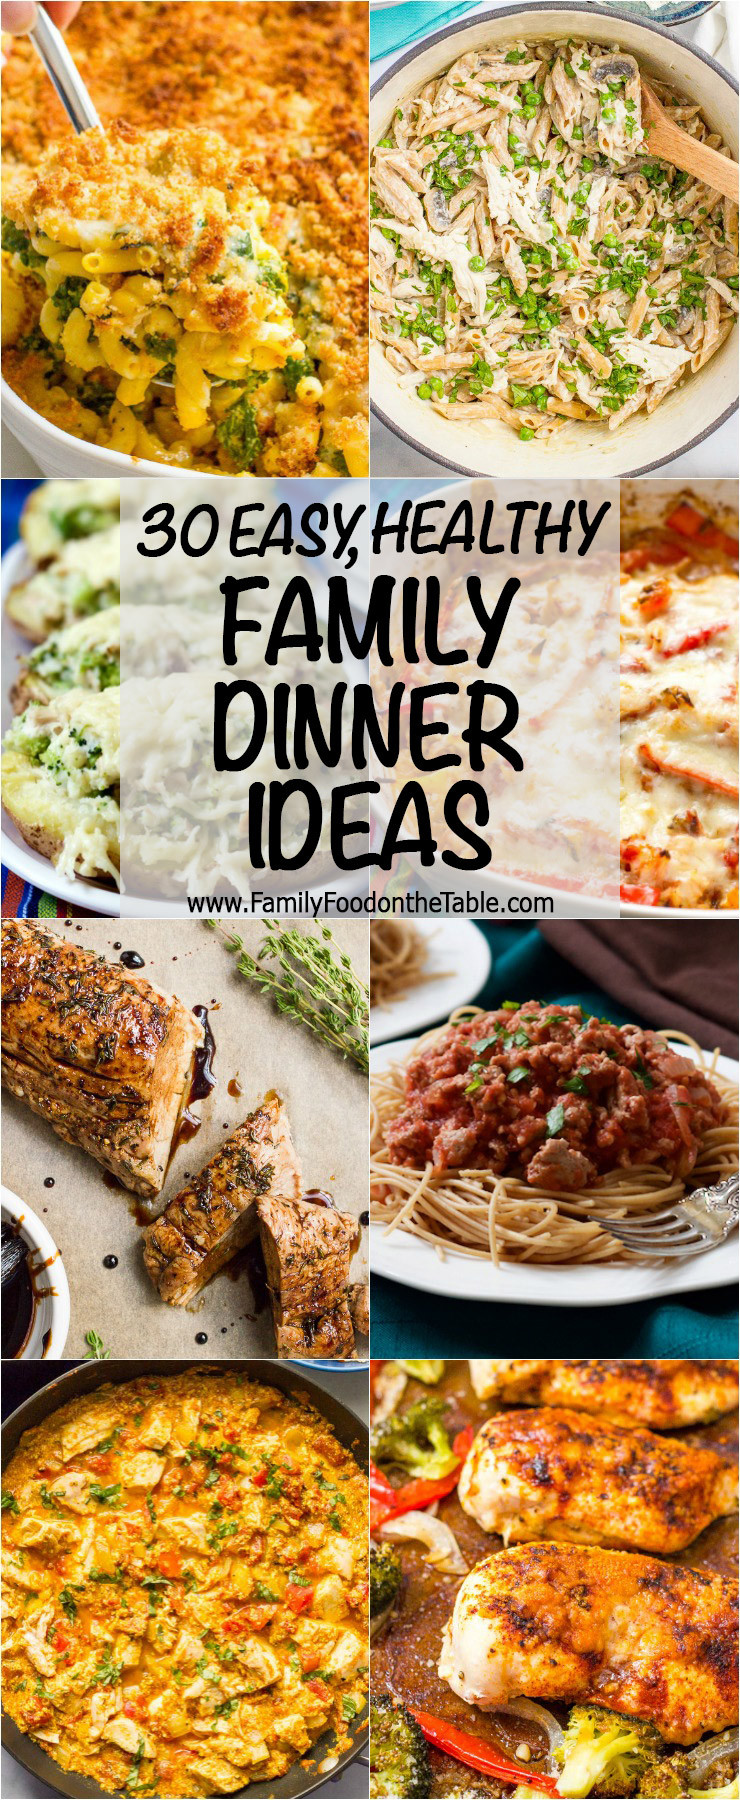 Easy Healthy Dinner Recipes For Family
 30 easy healthy family dinner ideas Family Food on the Table